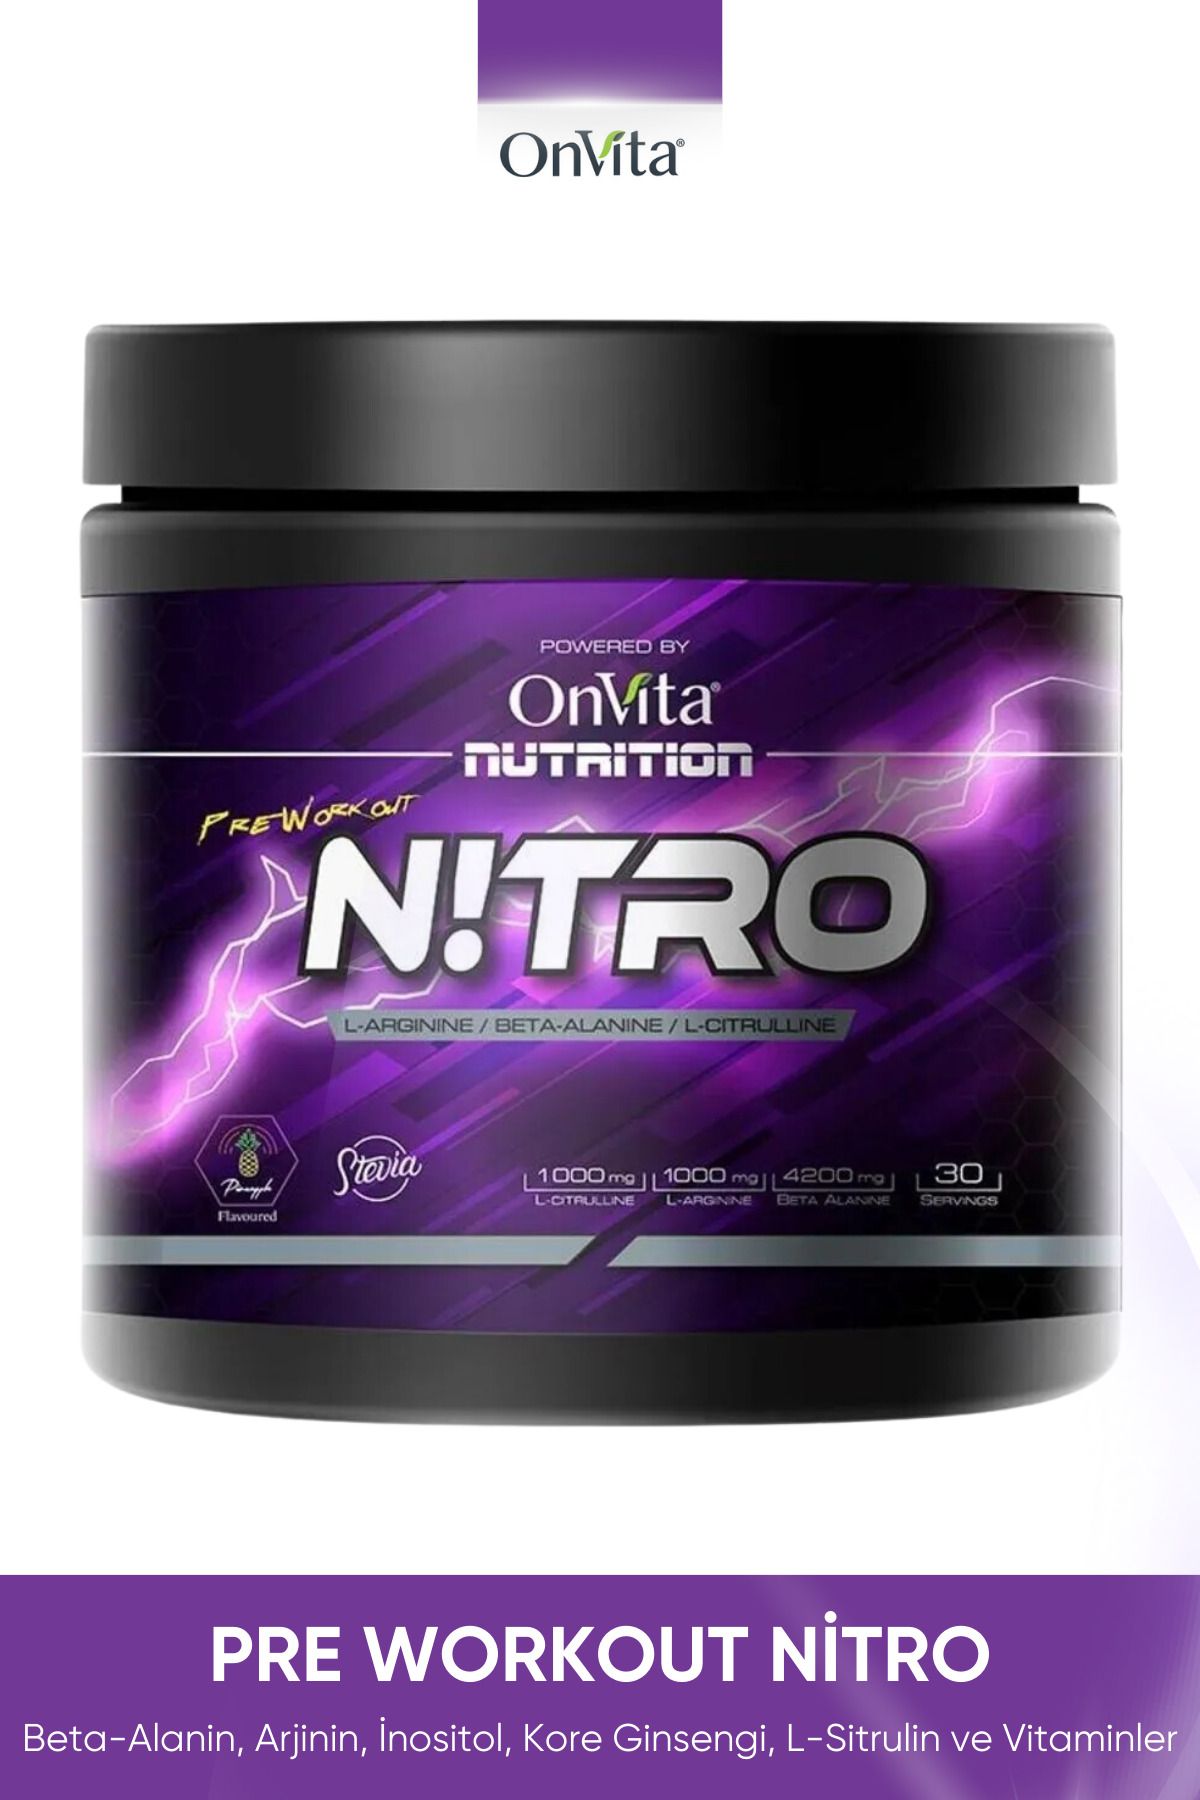 Onvita Nutrition Pre Workout Nitro L-arginine, Beta-alanine, L-citrulline